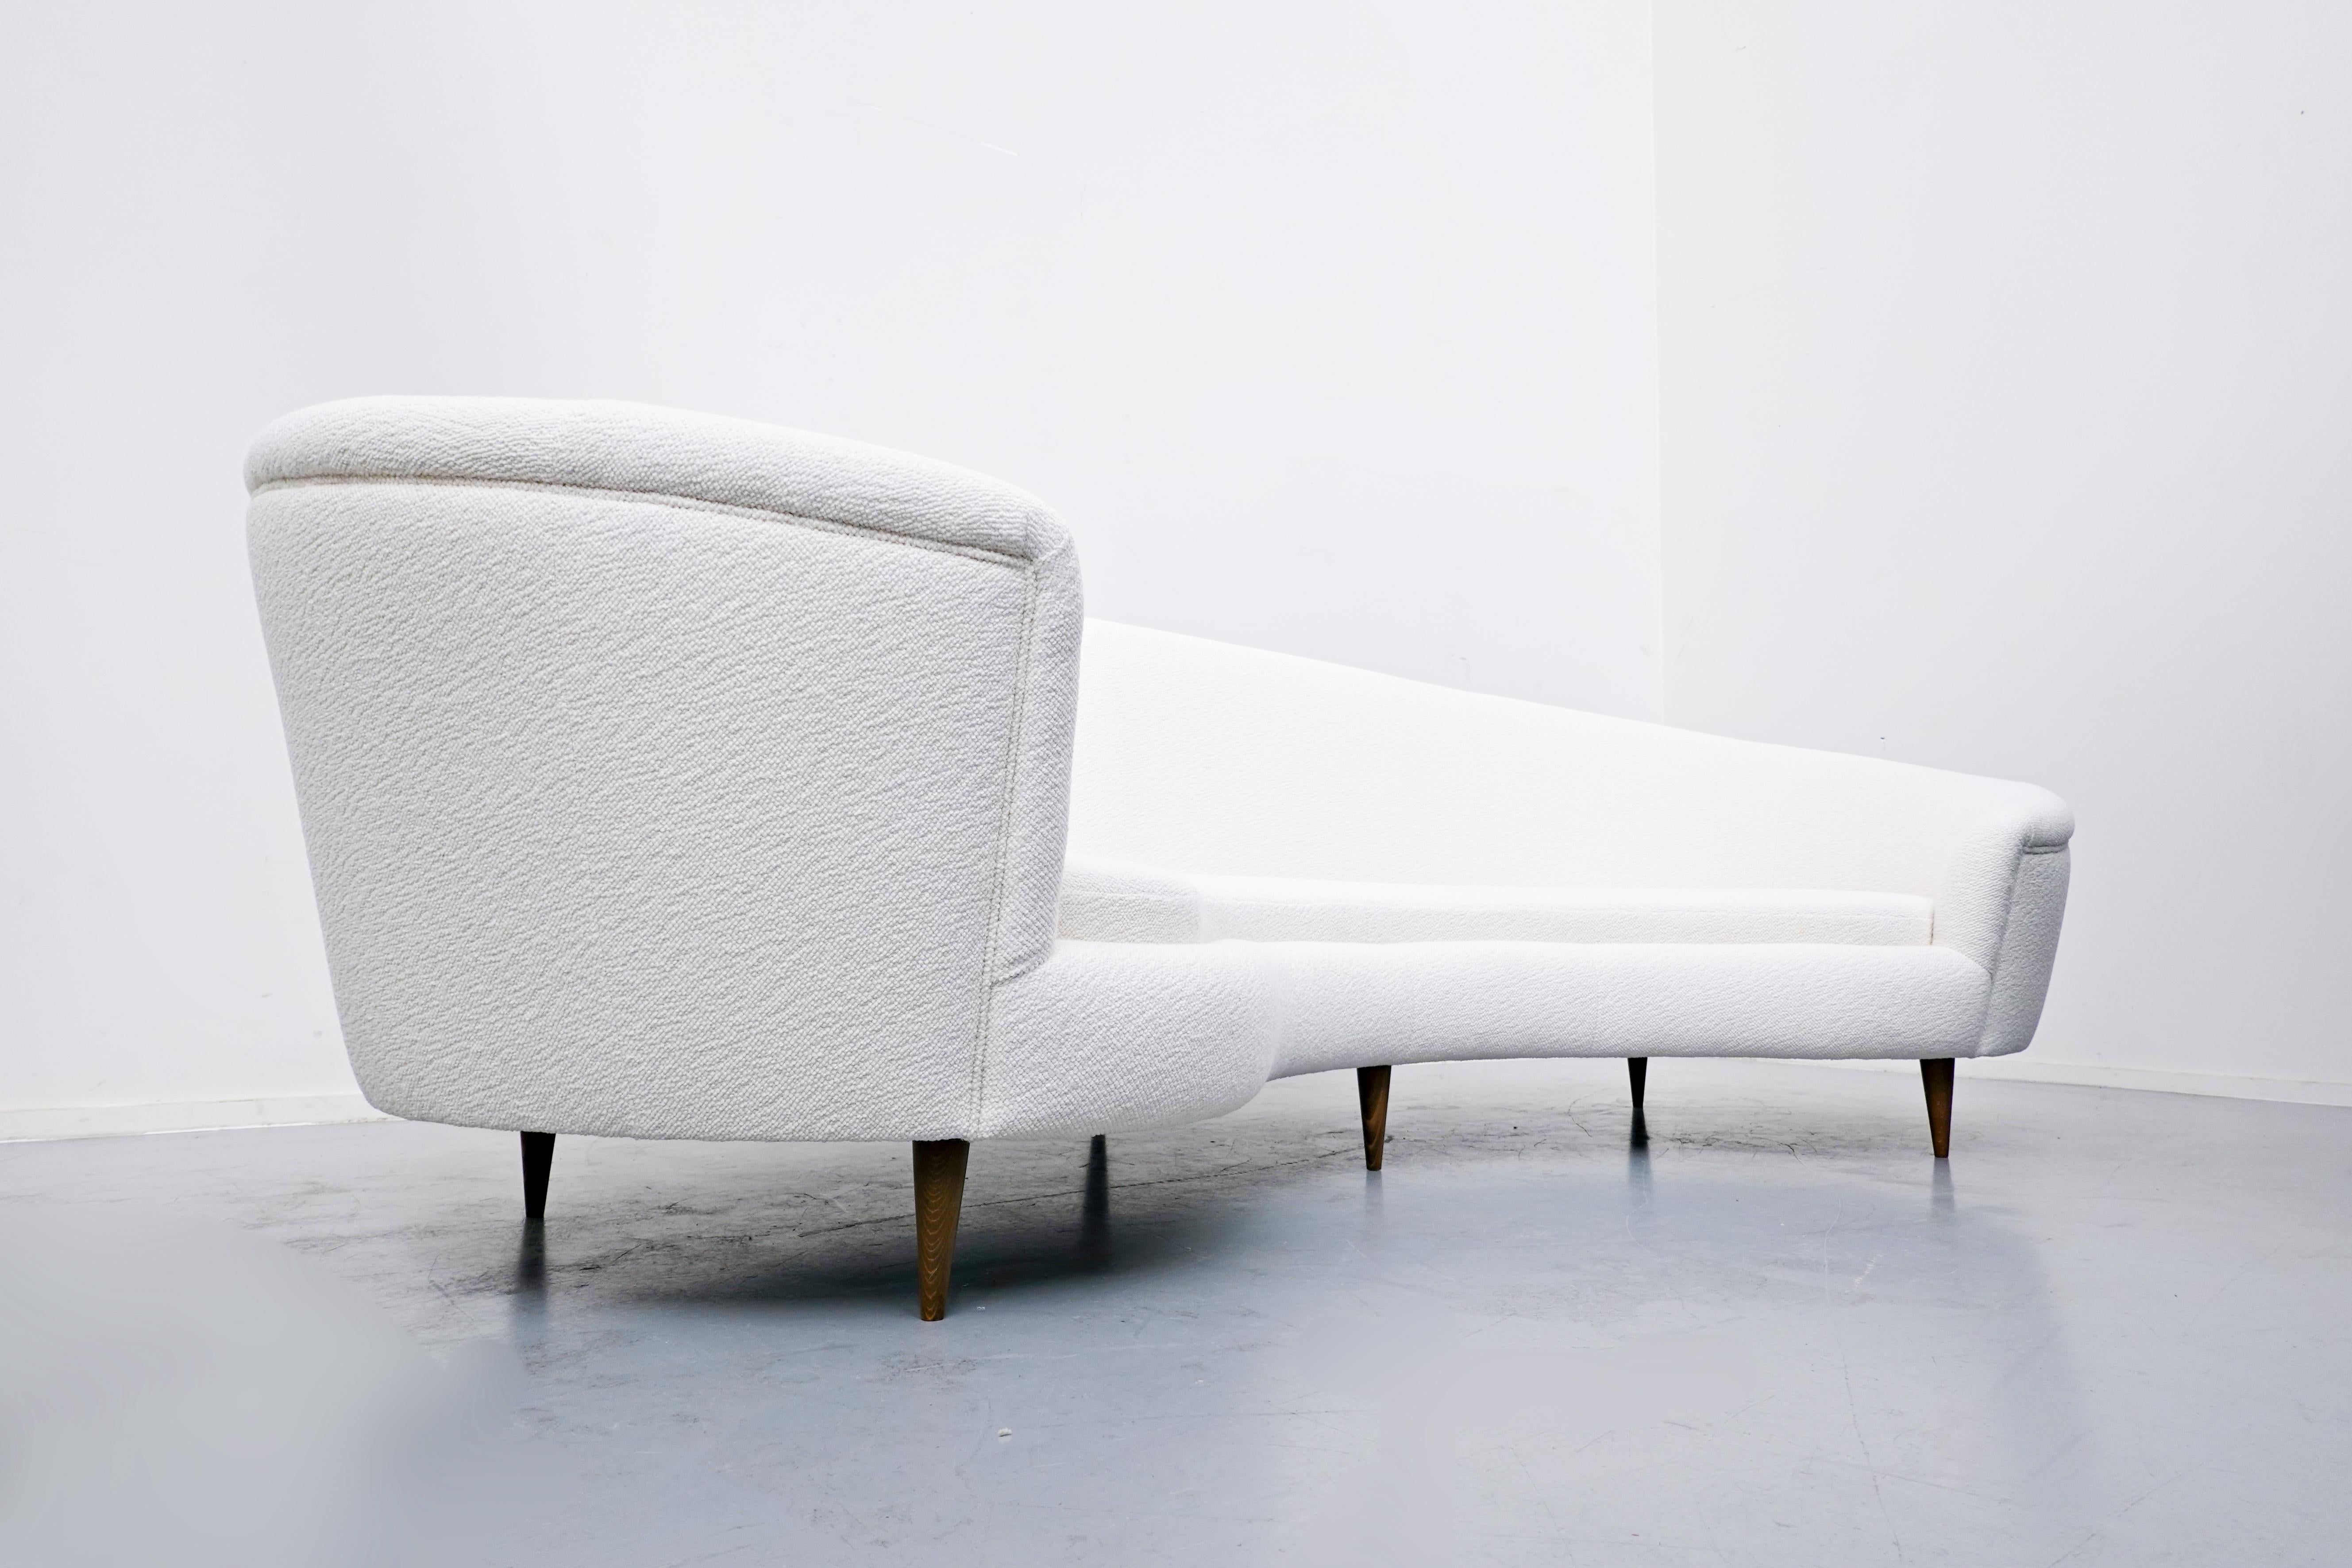 Mid-Century Modern Italian White Sofa in Fabric, 1960s, New Upholstery, European

Italian sofa, 1960s
New upholstery.